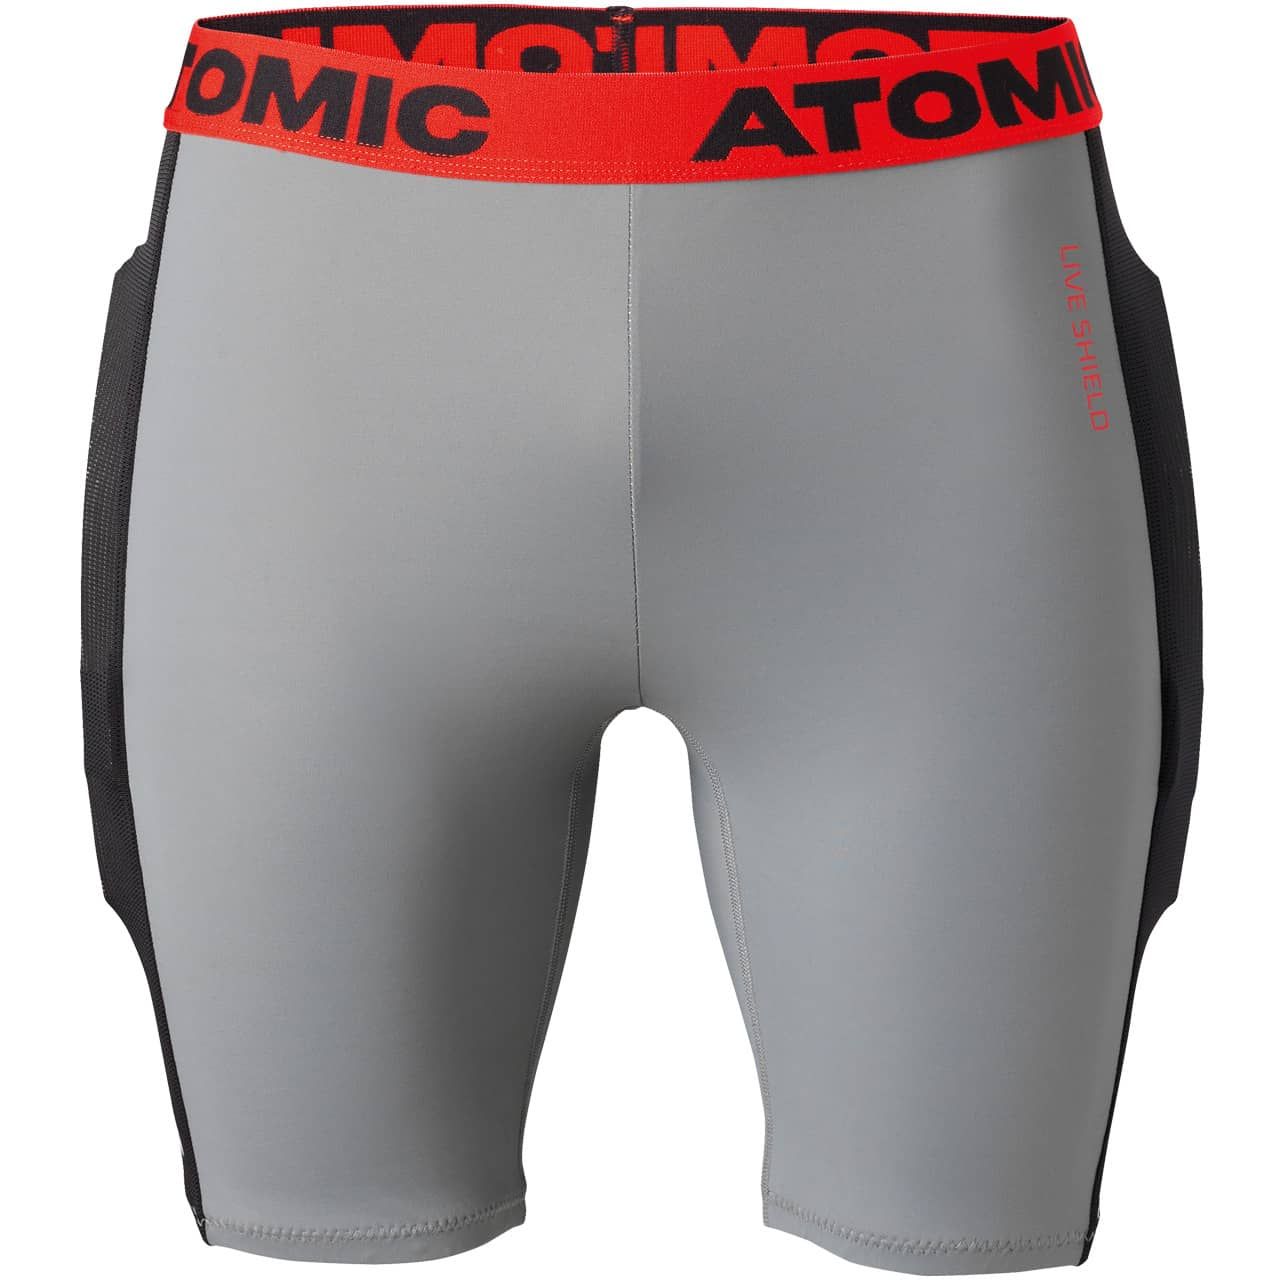 Atomic Live Shield Shorts grey/black von Atomic